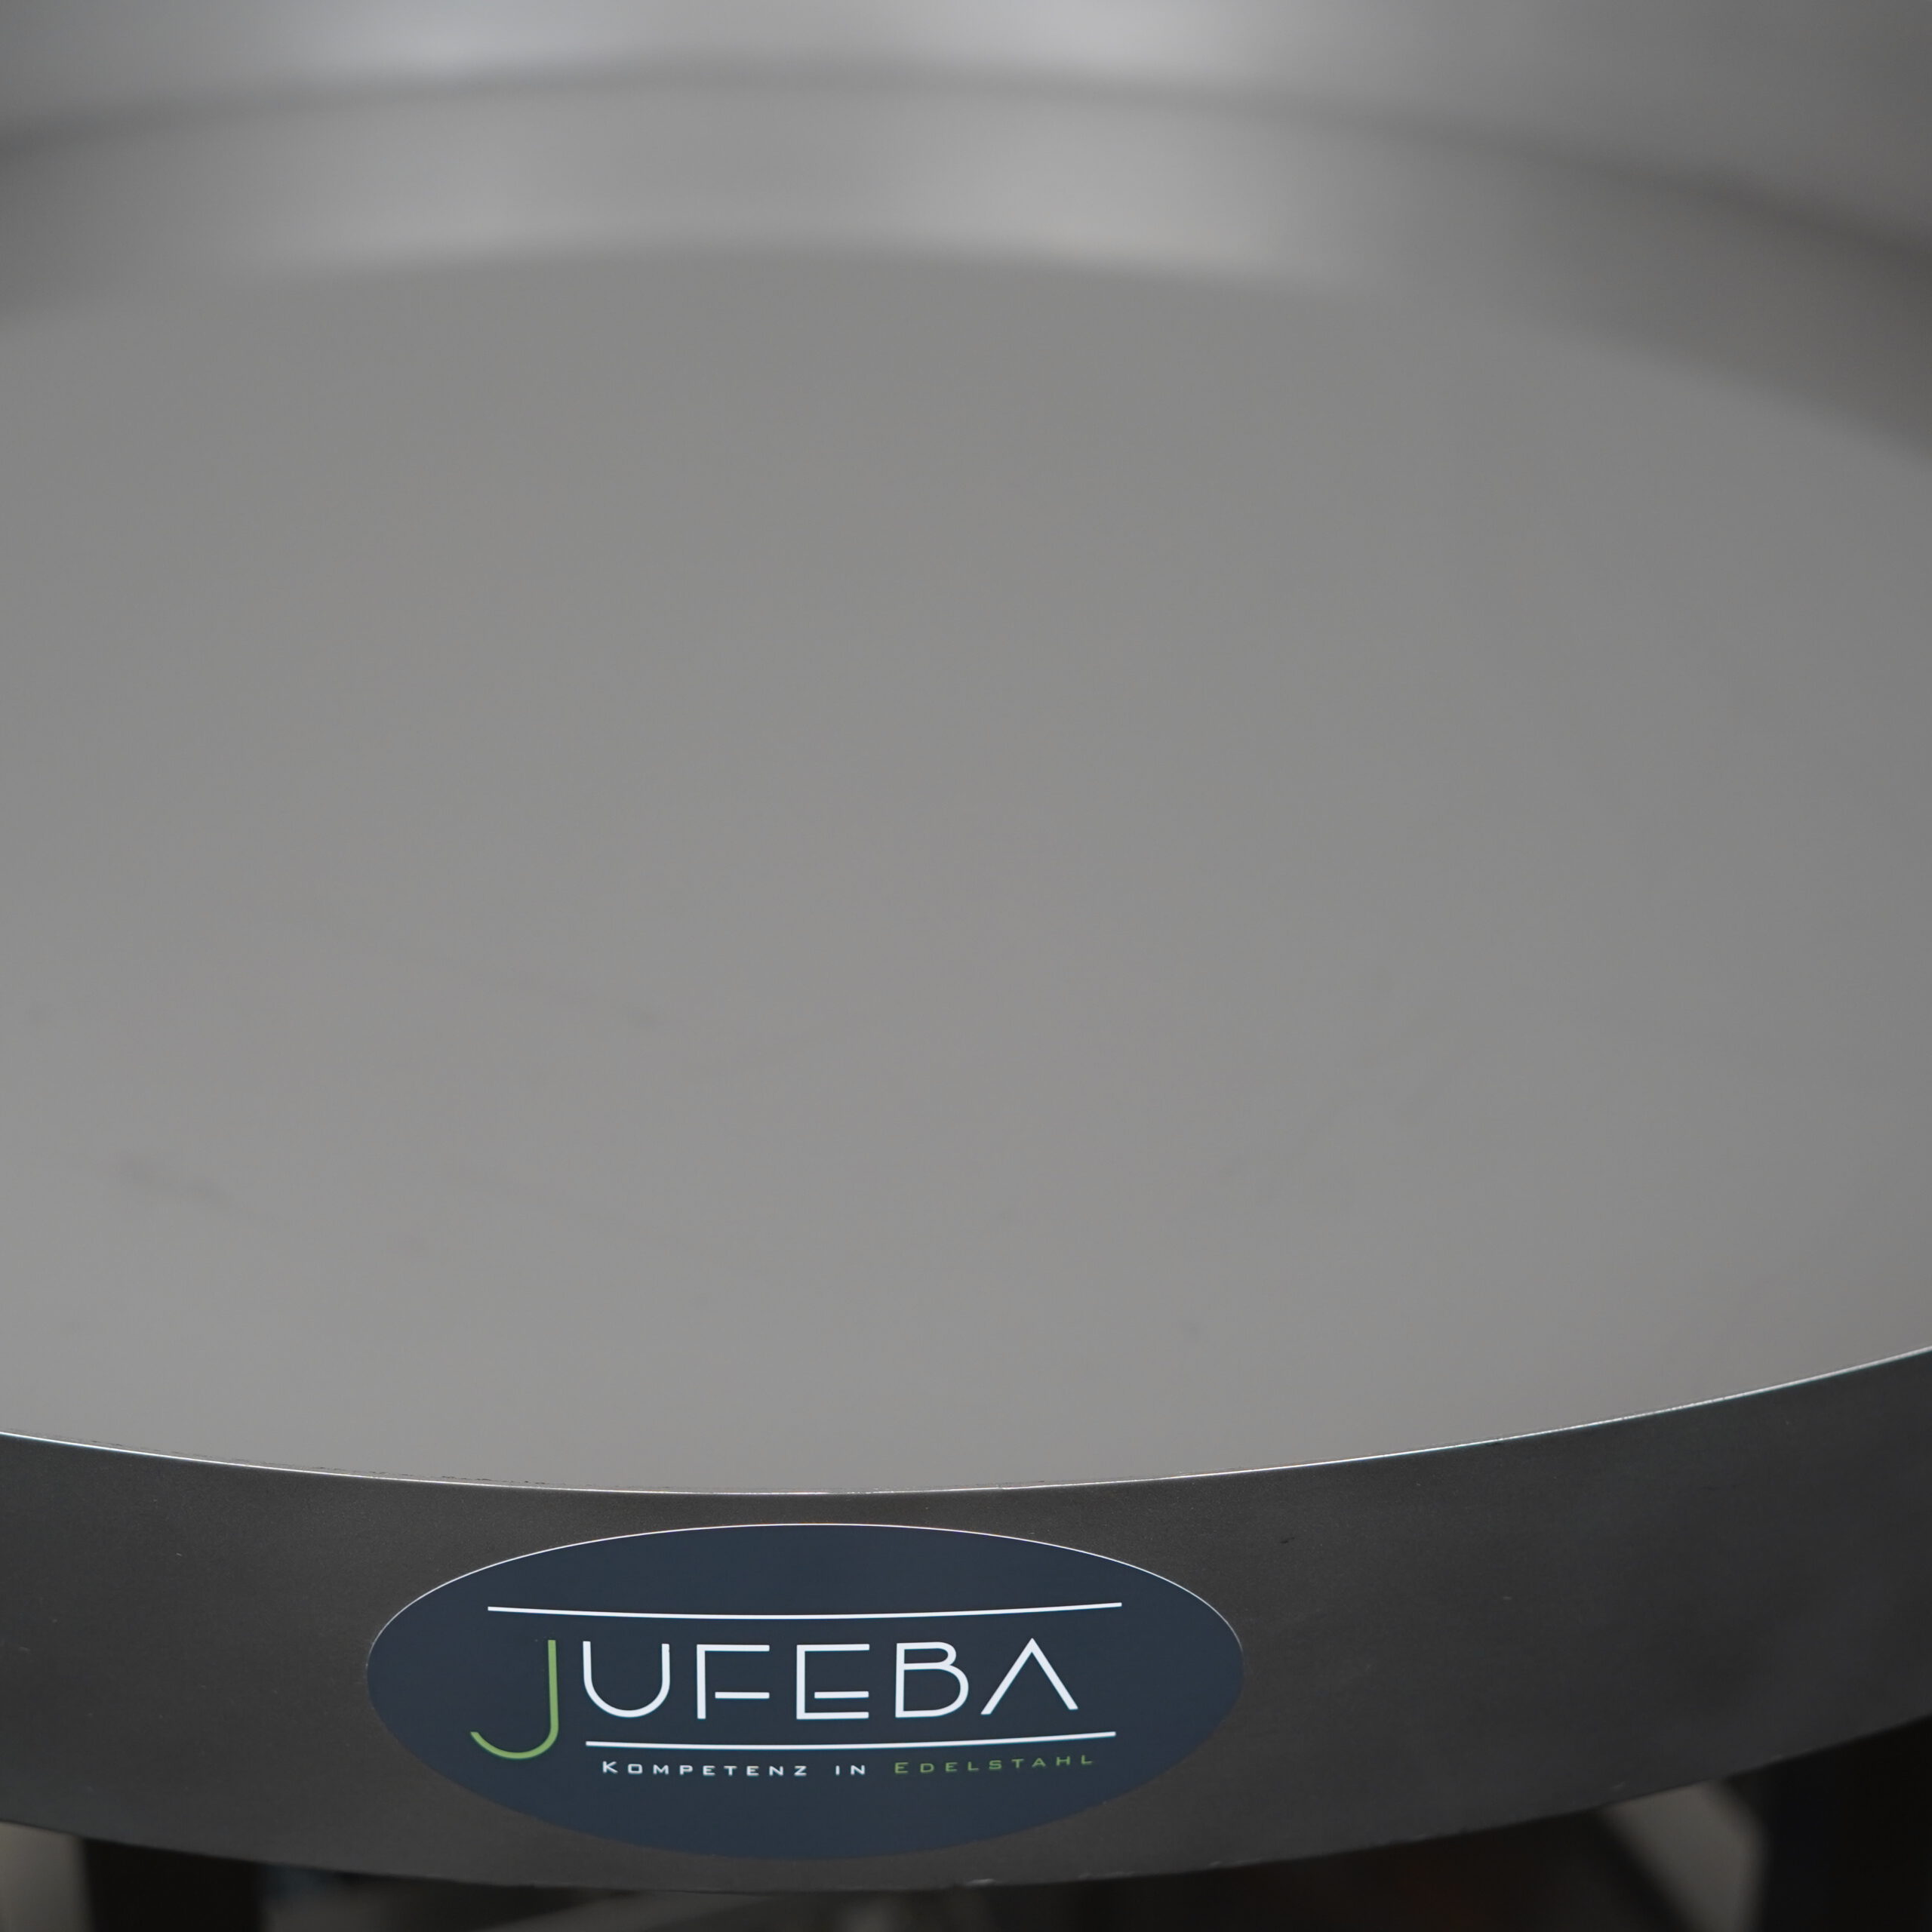 Jufeba – PRECISION IN STAINLESS STEEL